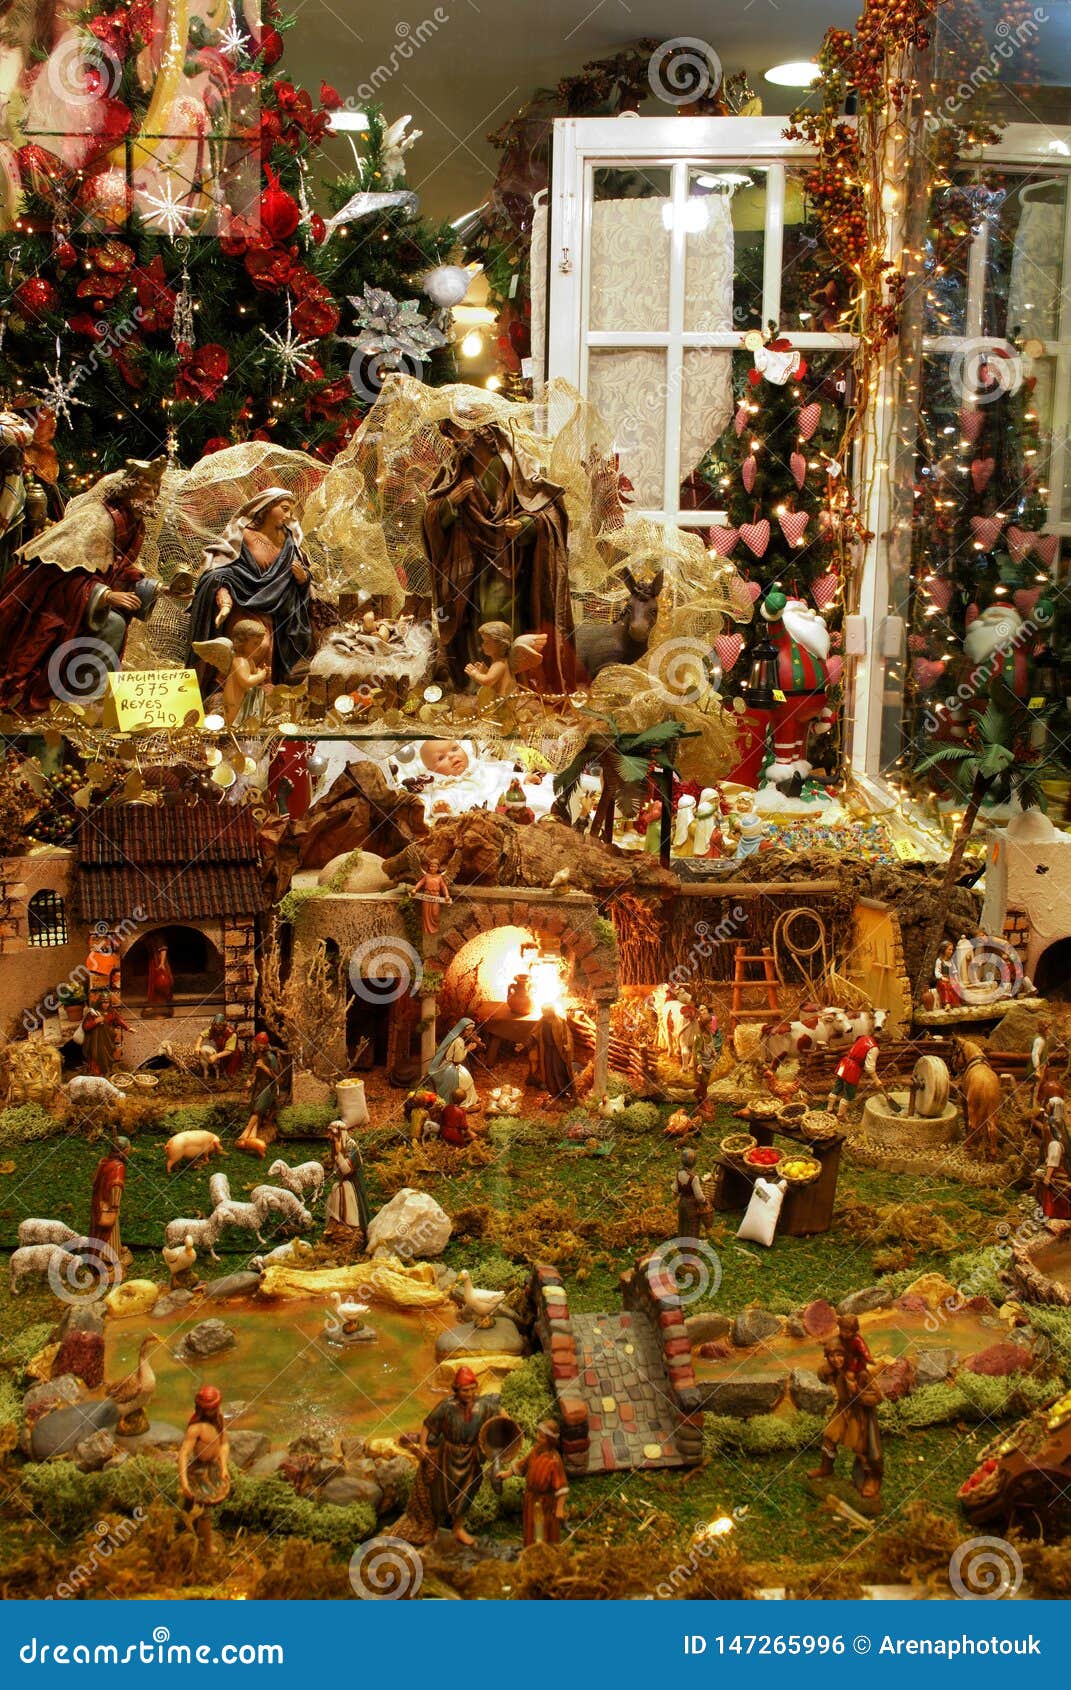 Shop Window Iridescent Christmas Decorations Made Stock Photo 1168120924